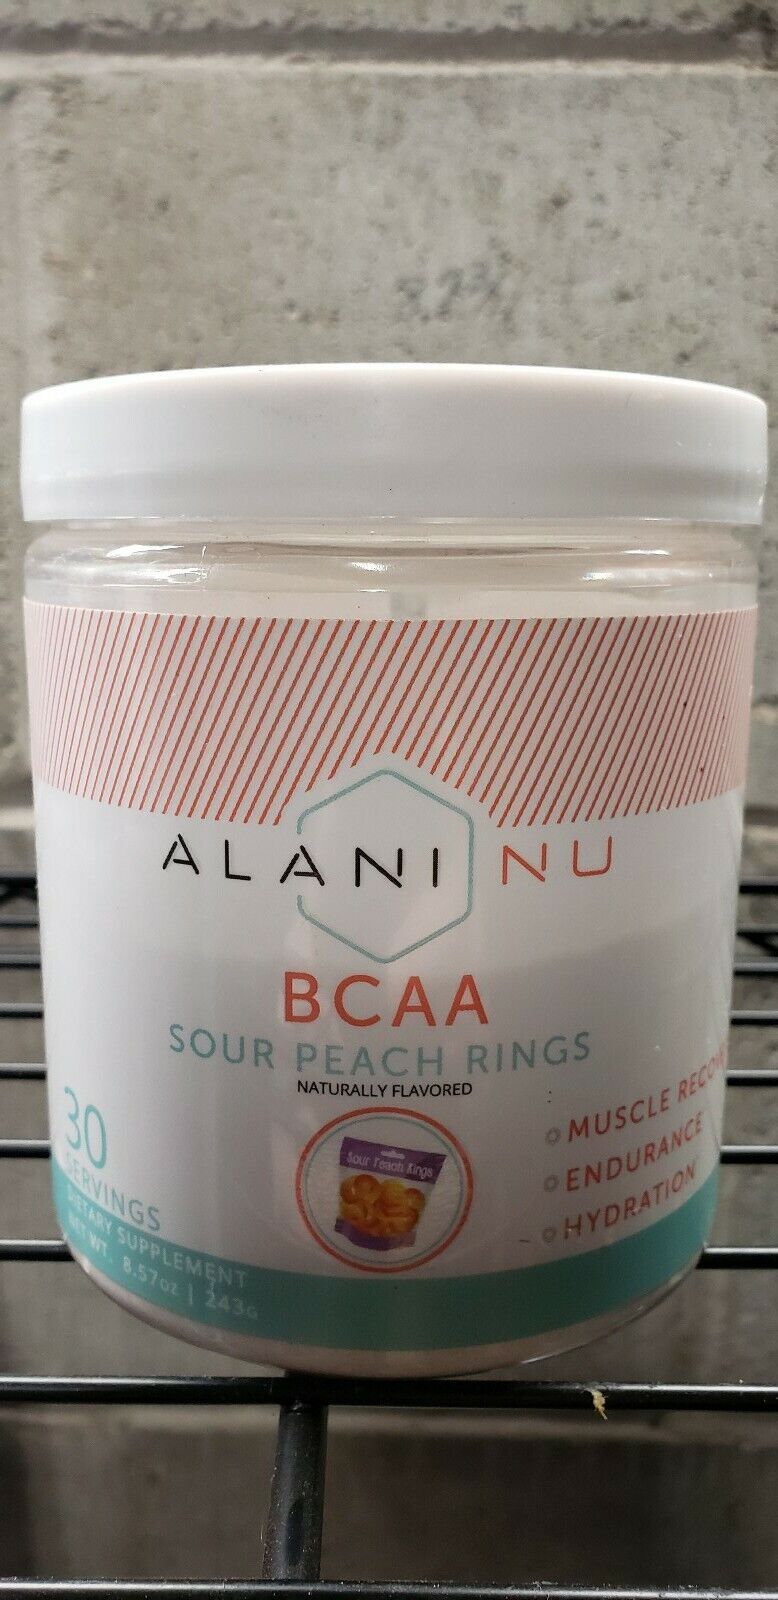 Alani Nu BCAA - Amino Acids - Recovery - Sour Peach Rings - 30 S